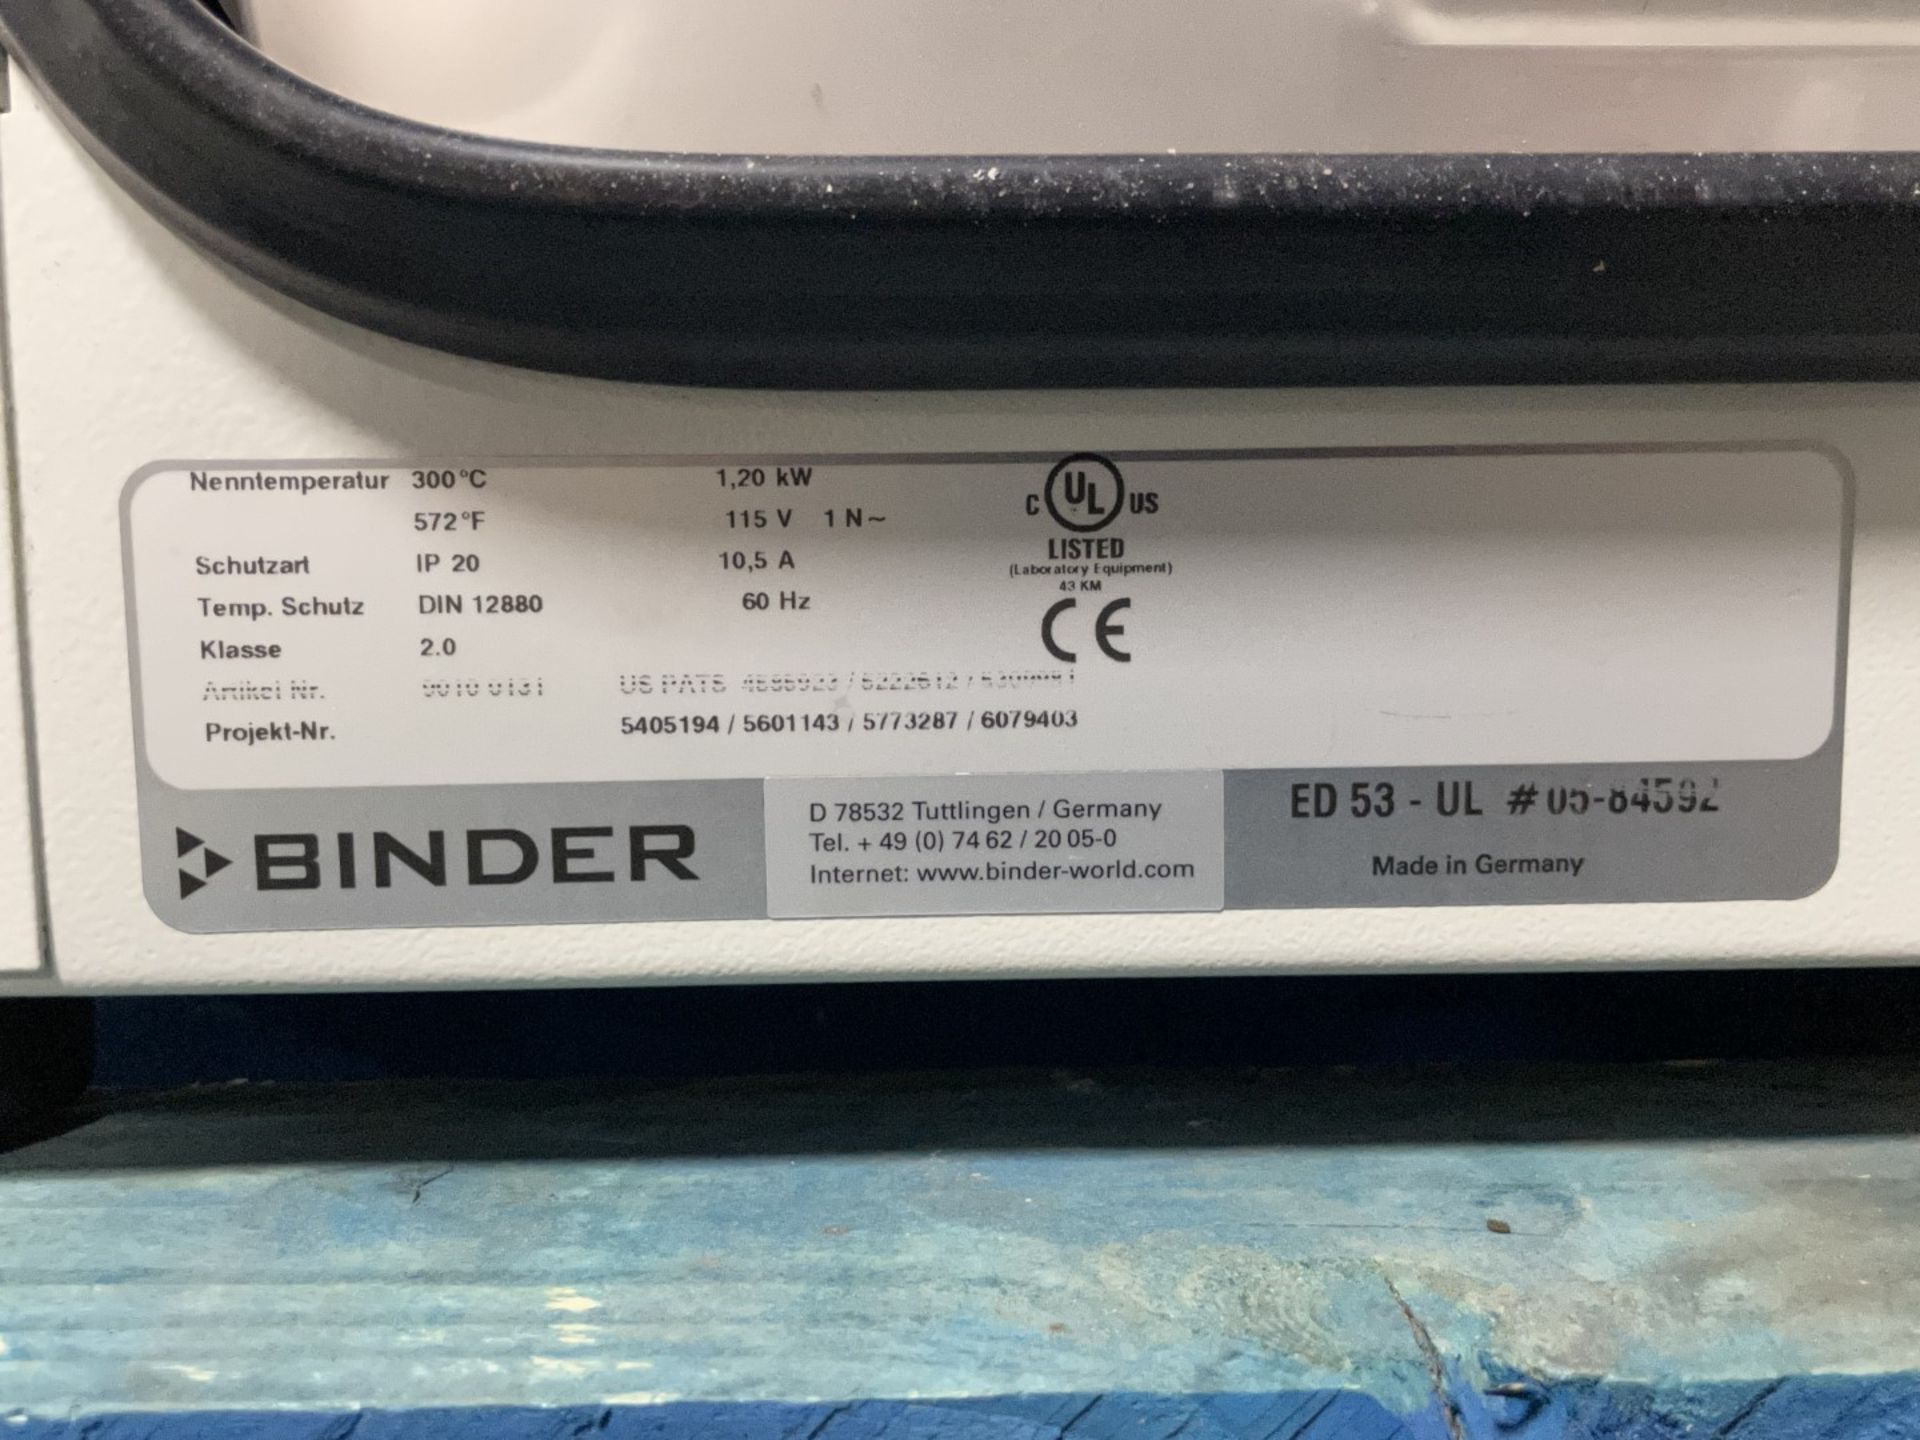 Binder Laboratory Oven, model ED 53-UL, 572 f max temp, 1.2 kw, 115 volt, serial# 05-84592. - Image 3 of 7